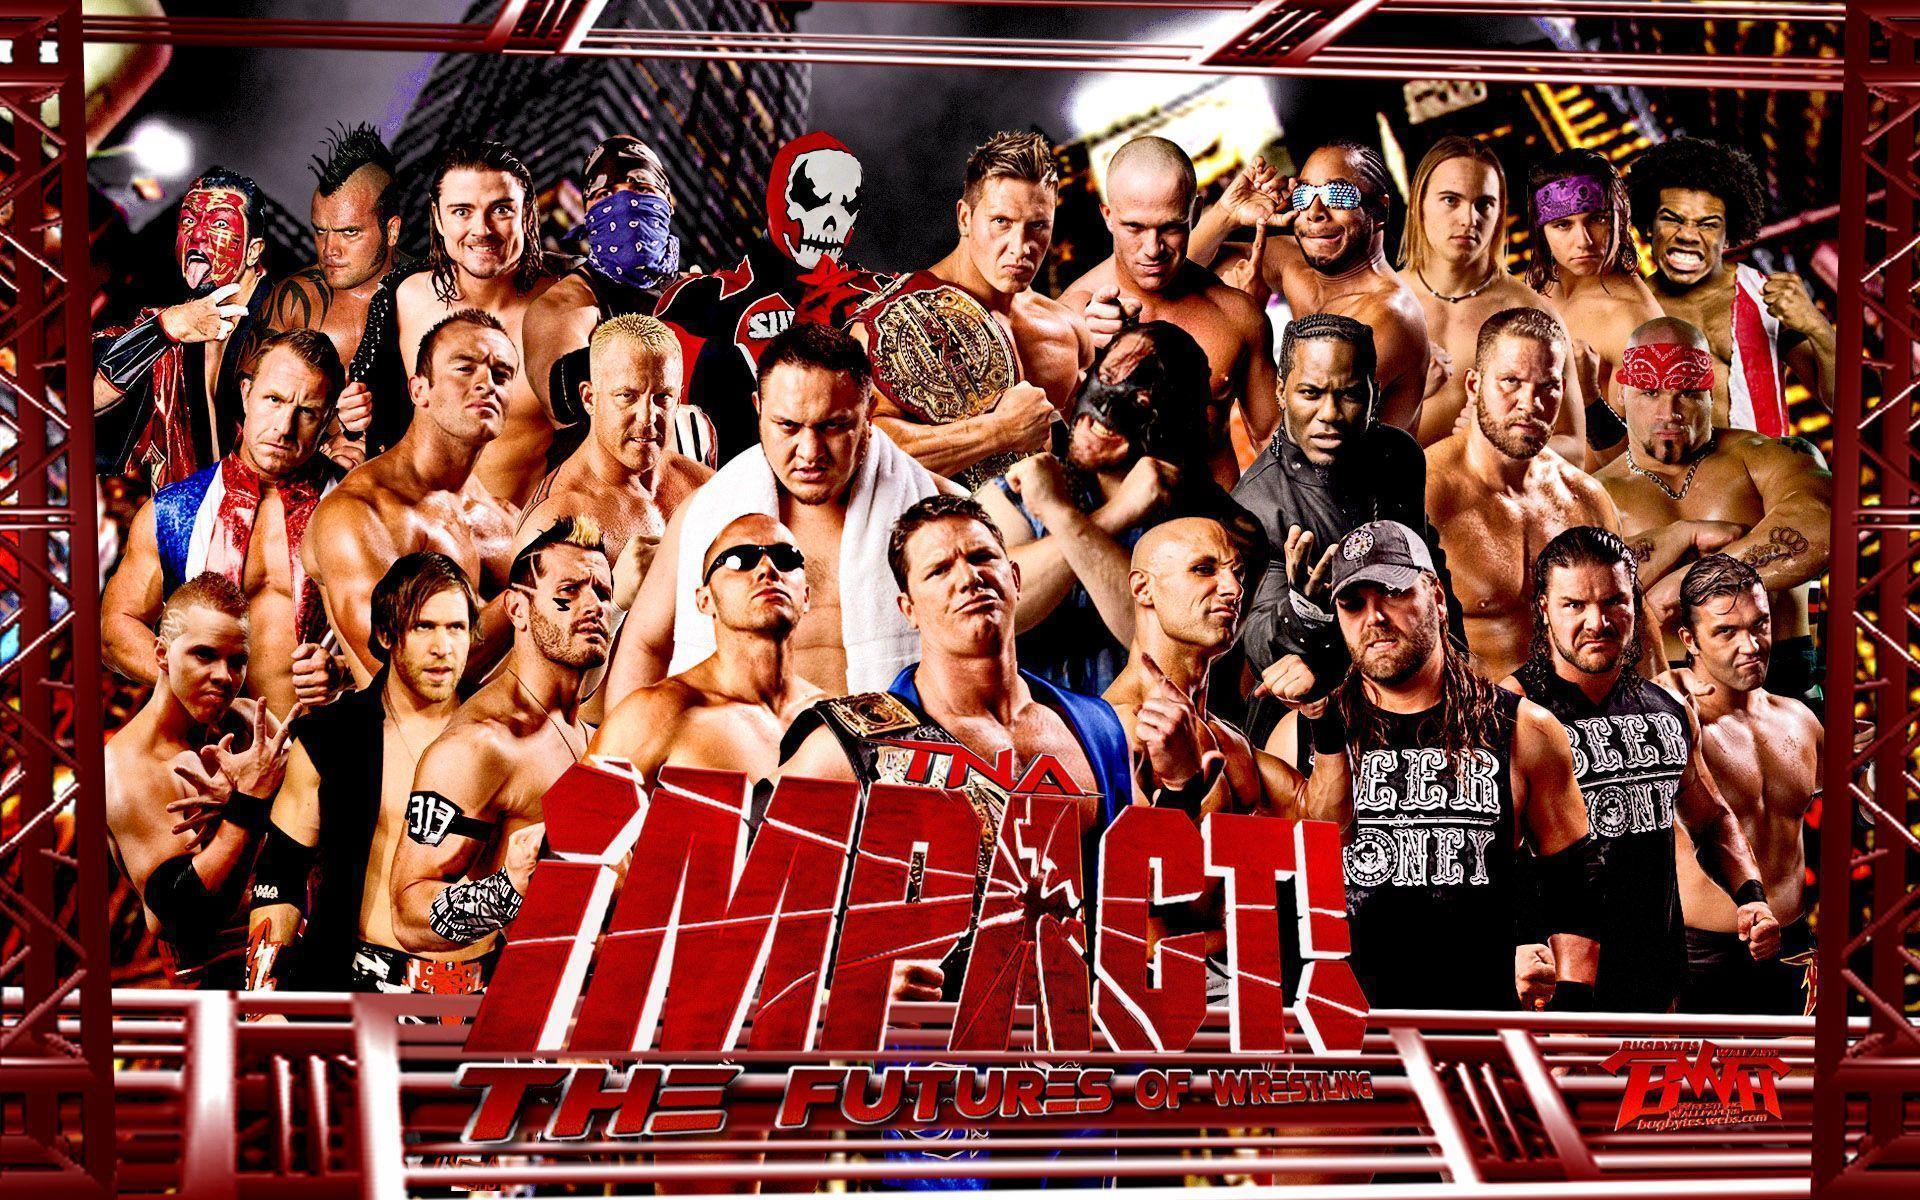 Edge Vs Chris Jericho Wrestlemania 26 wallpaper